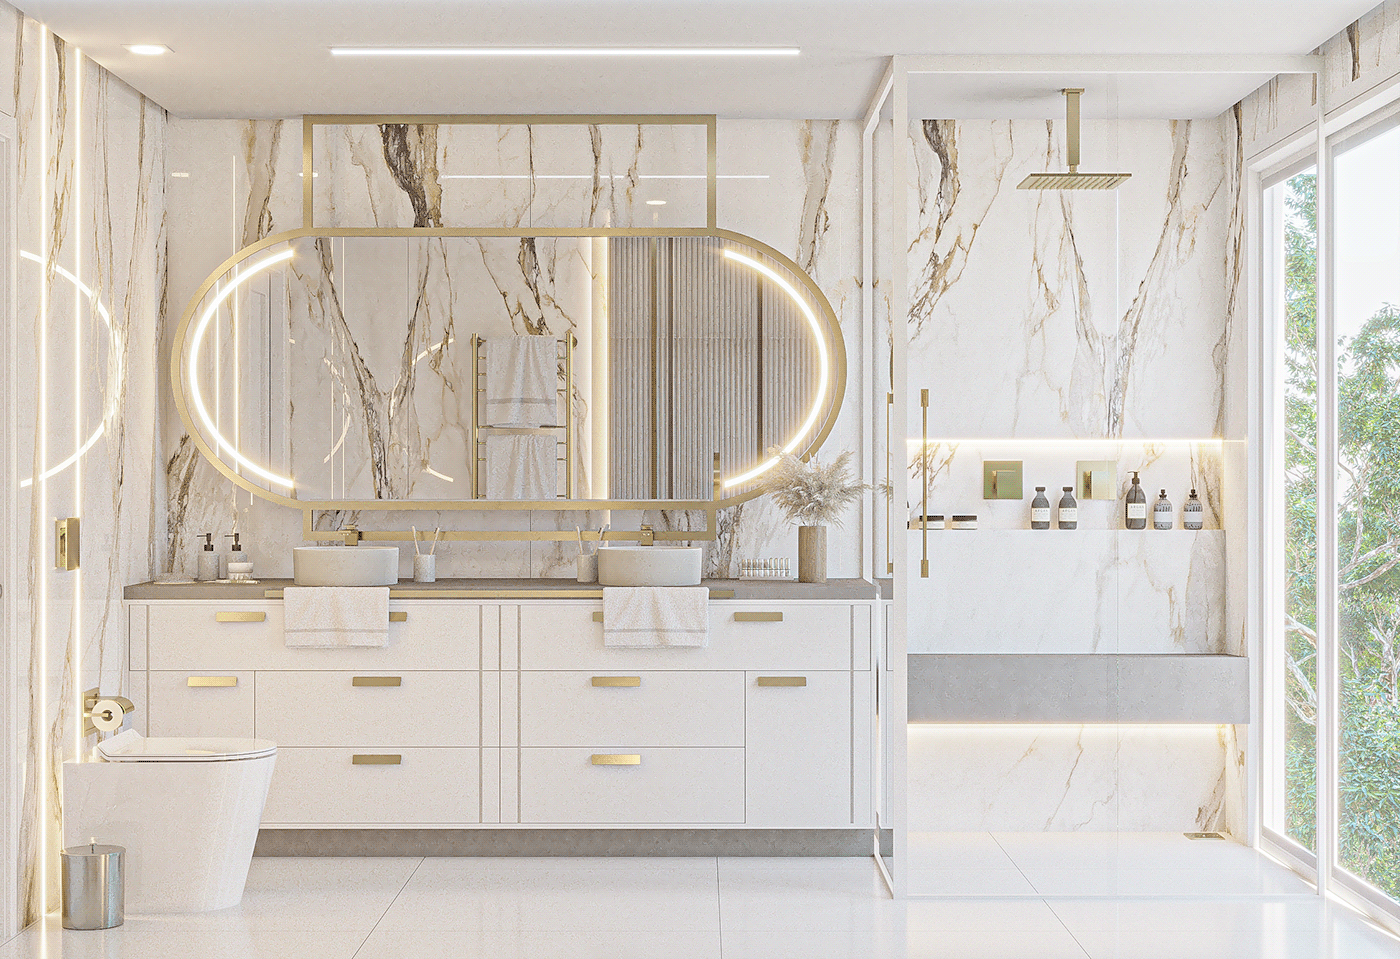 design architecture arquitectura banheiro bathroom vray render SketchUP modern Render interior design 